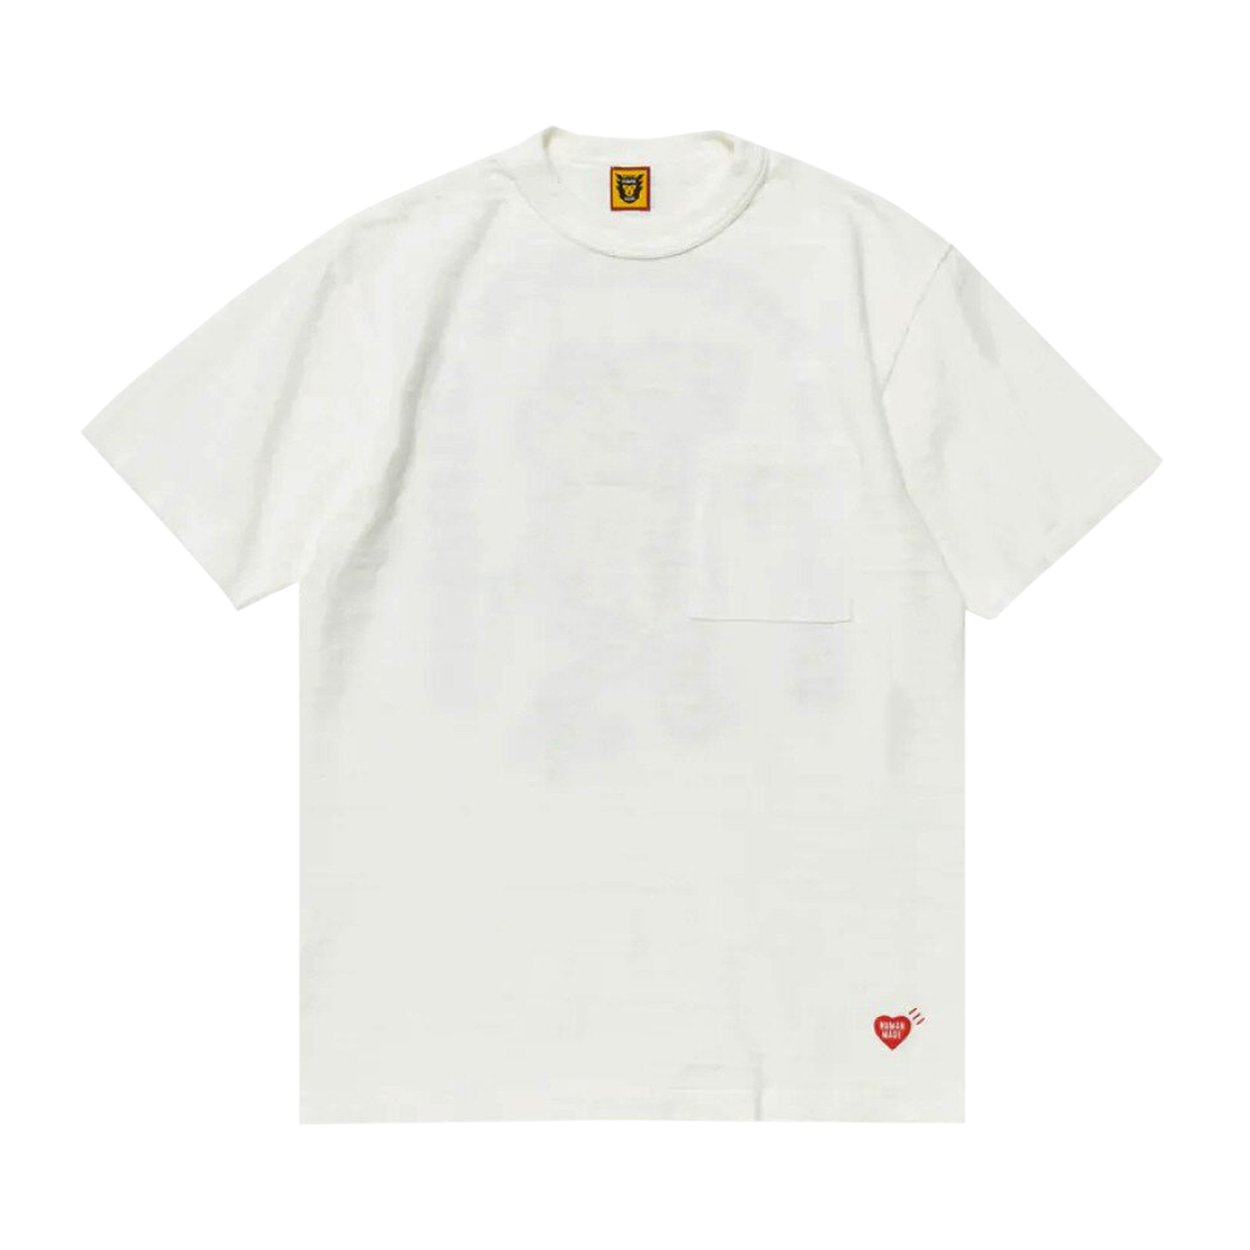 Buy Human Made Pocket T-Shirt #1 'White' - HM25CS040 WHIT | GOAT